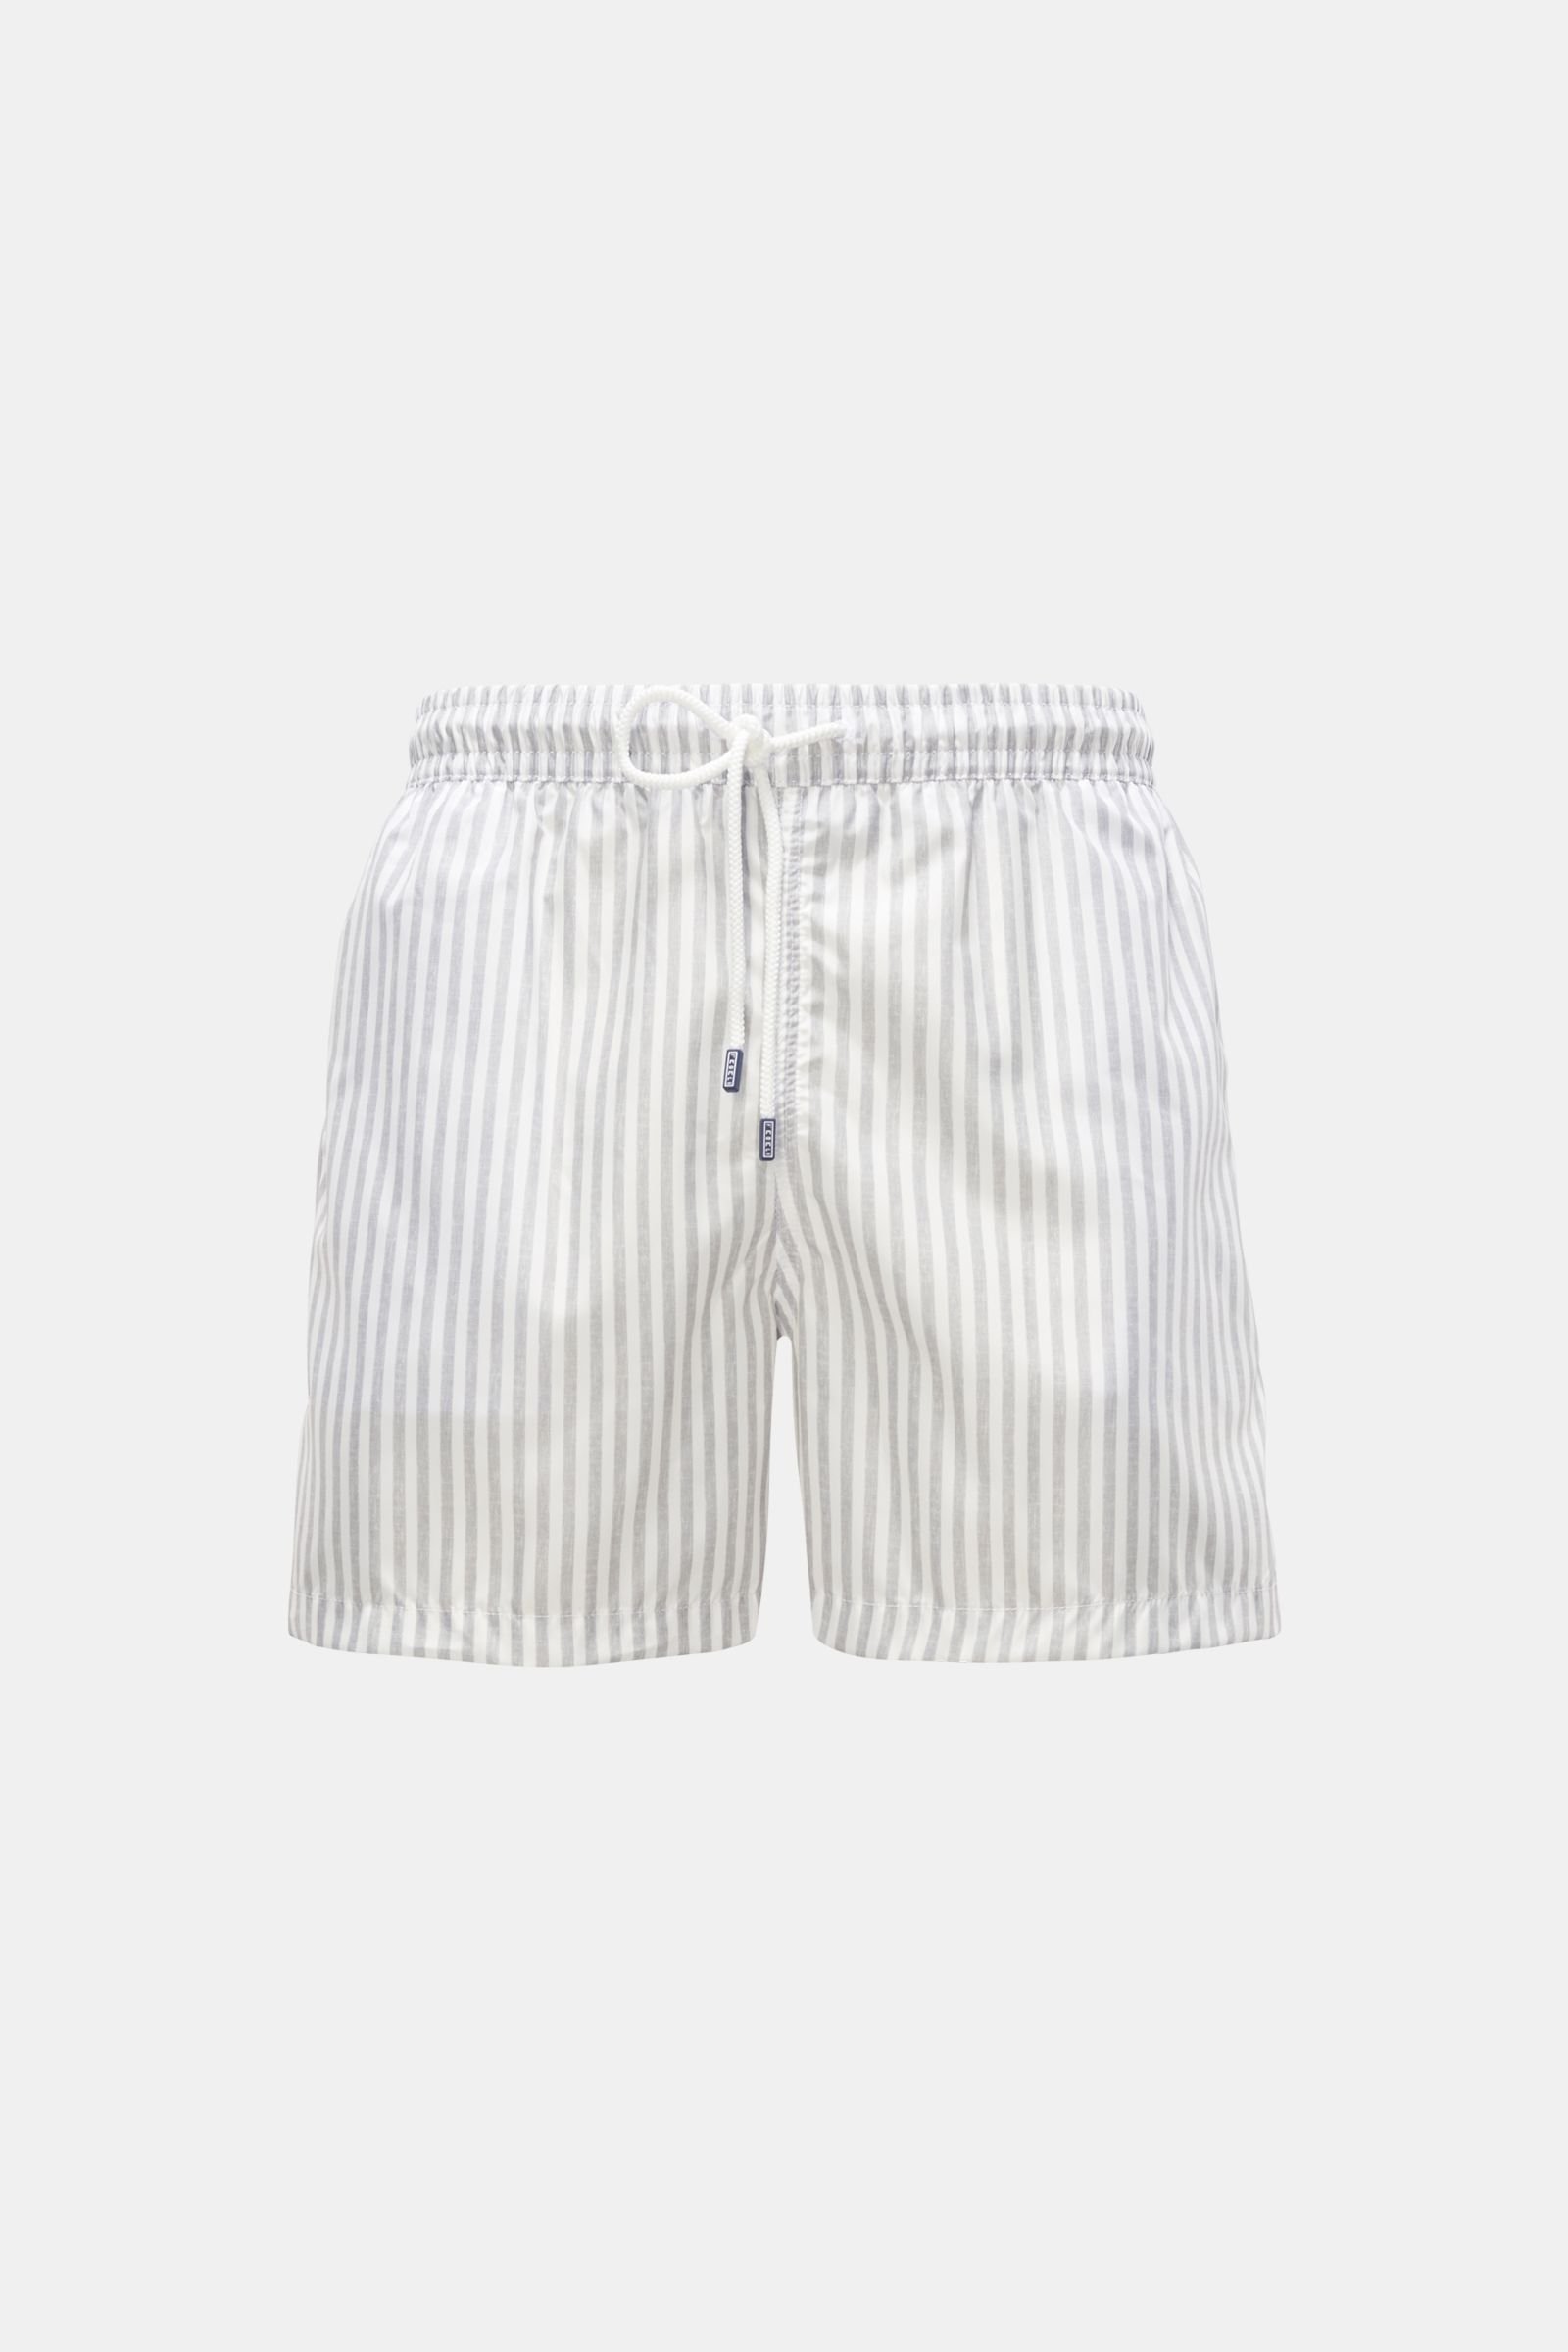 Swim shorts 'Madeira Airstop' light grey/white striped